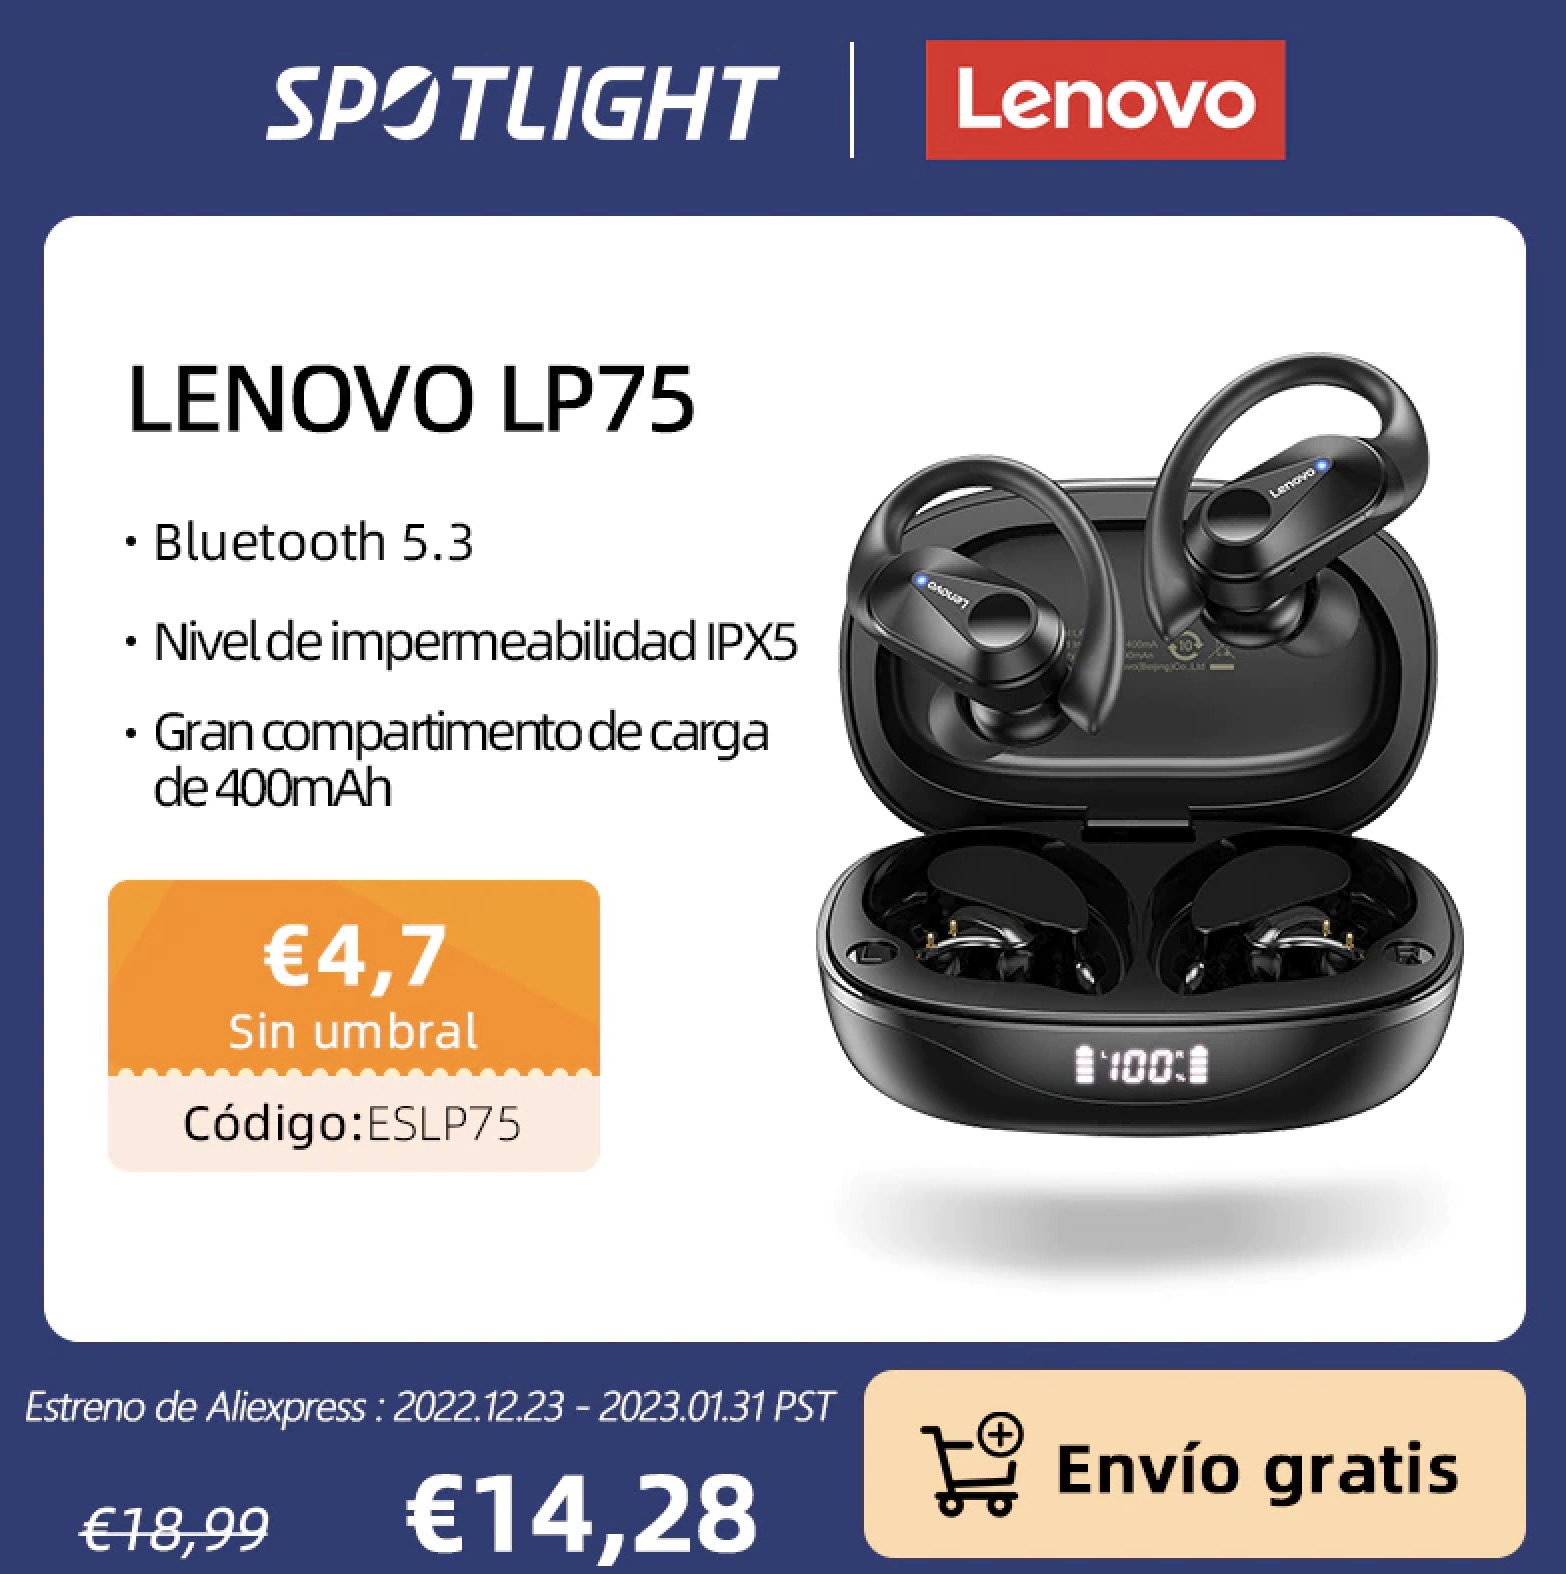 Lenovo LP75